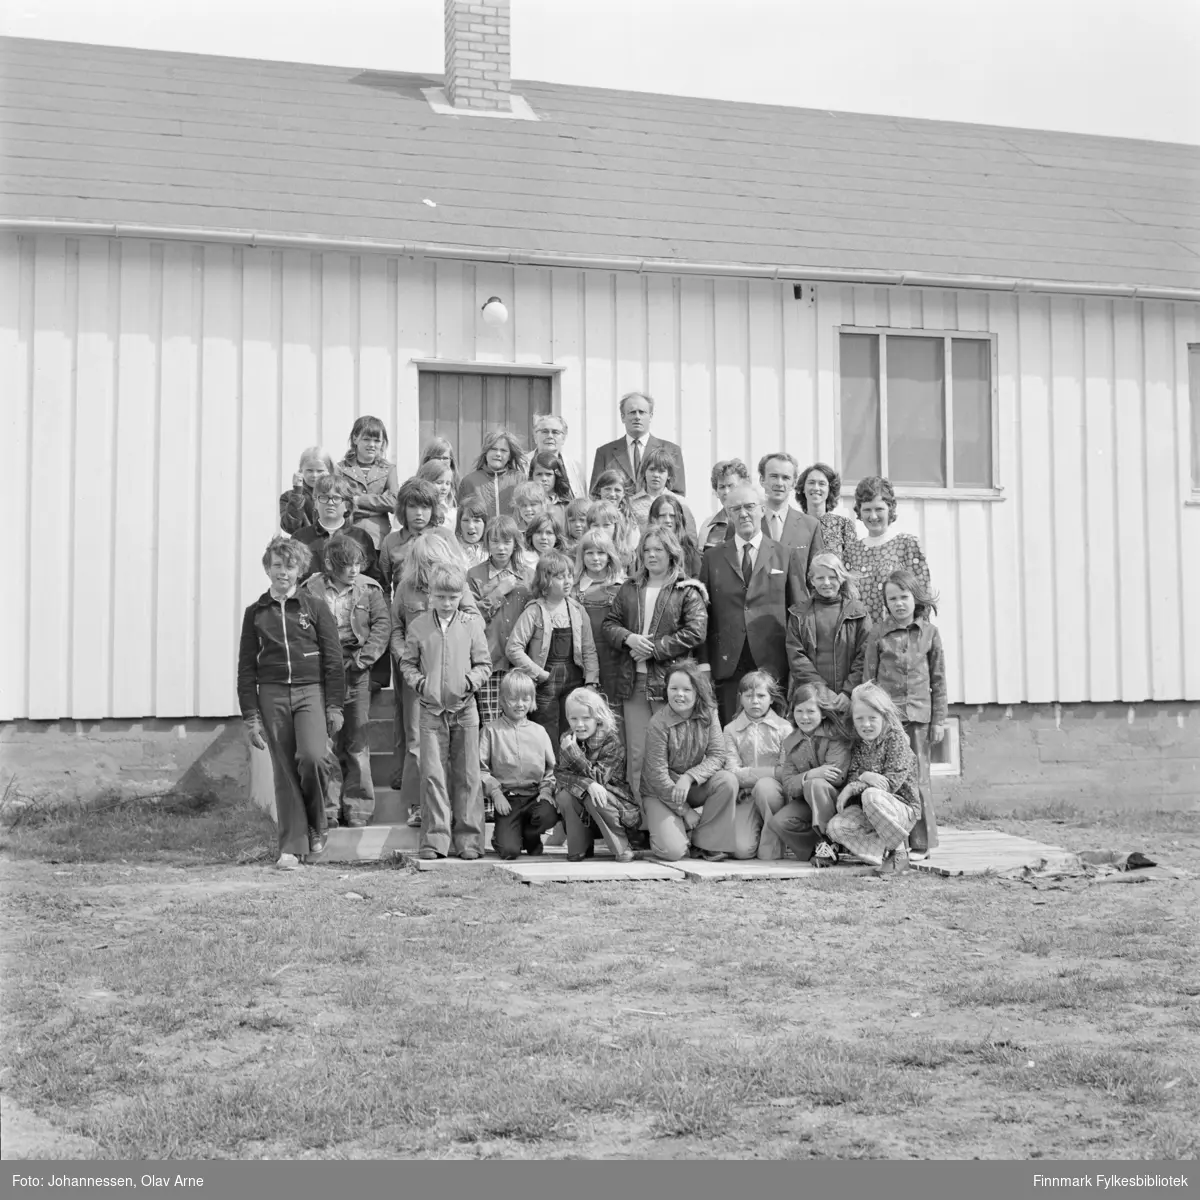 Kildesli i Tana, samma barna som på Tautrekkingen på foto fbib.19026-104 og -105

Foto trolig tatt på tidlig 1970-tallet
